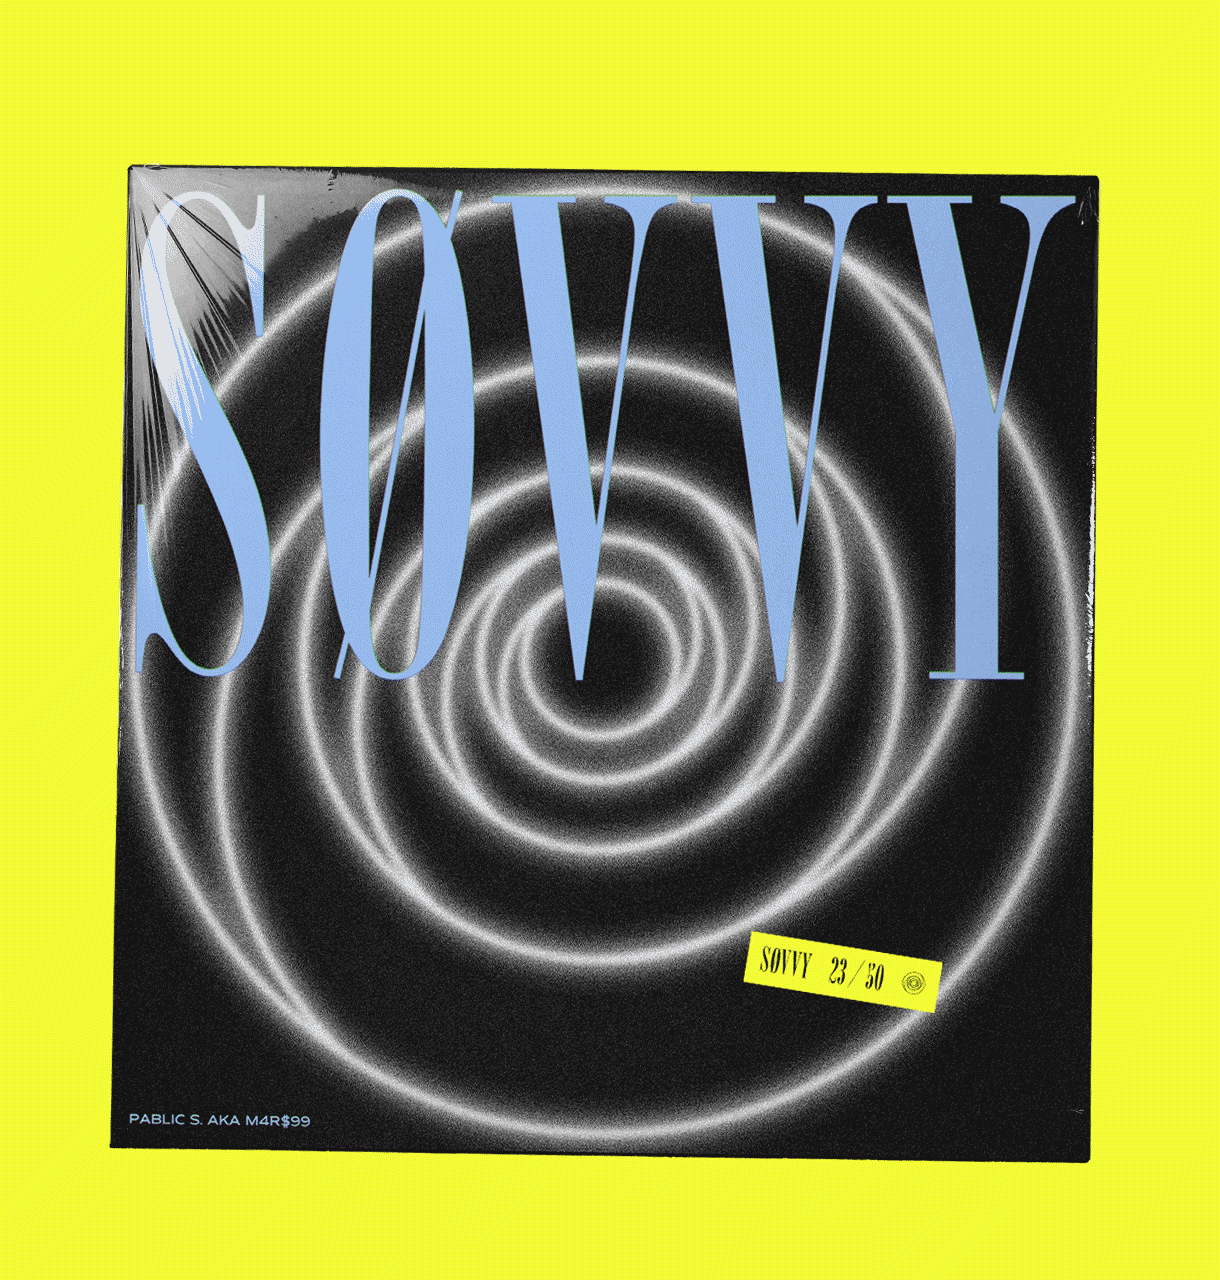 M4R$99 – Søvvy album art 3